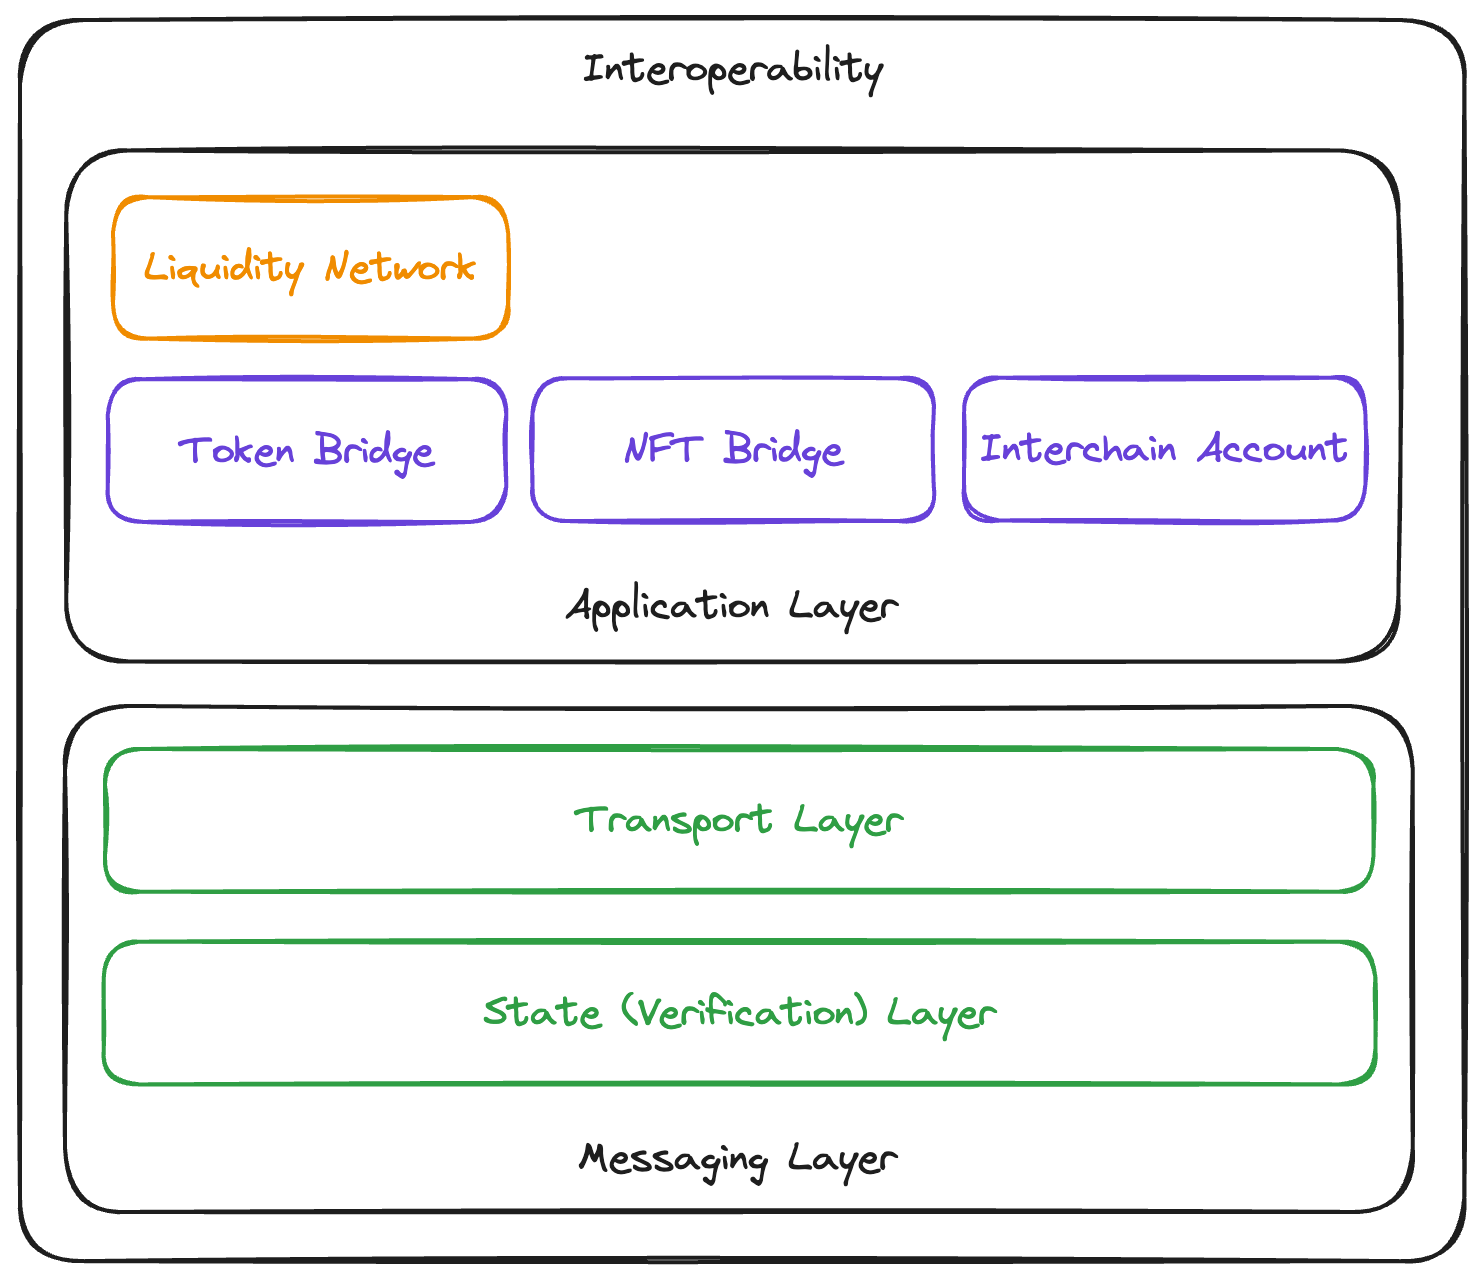 Hierarchy of Interoperability